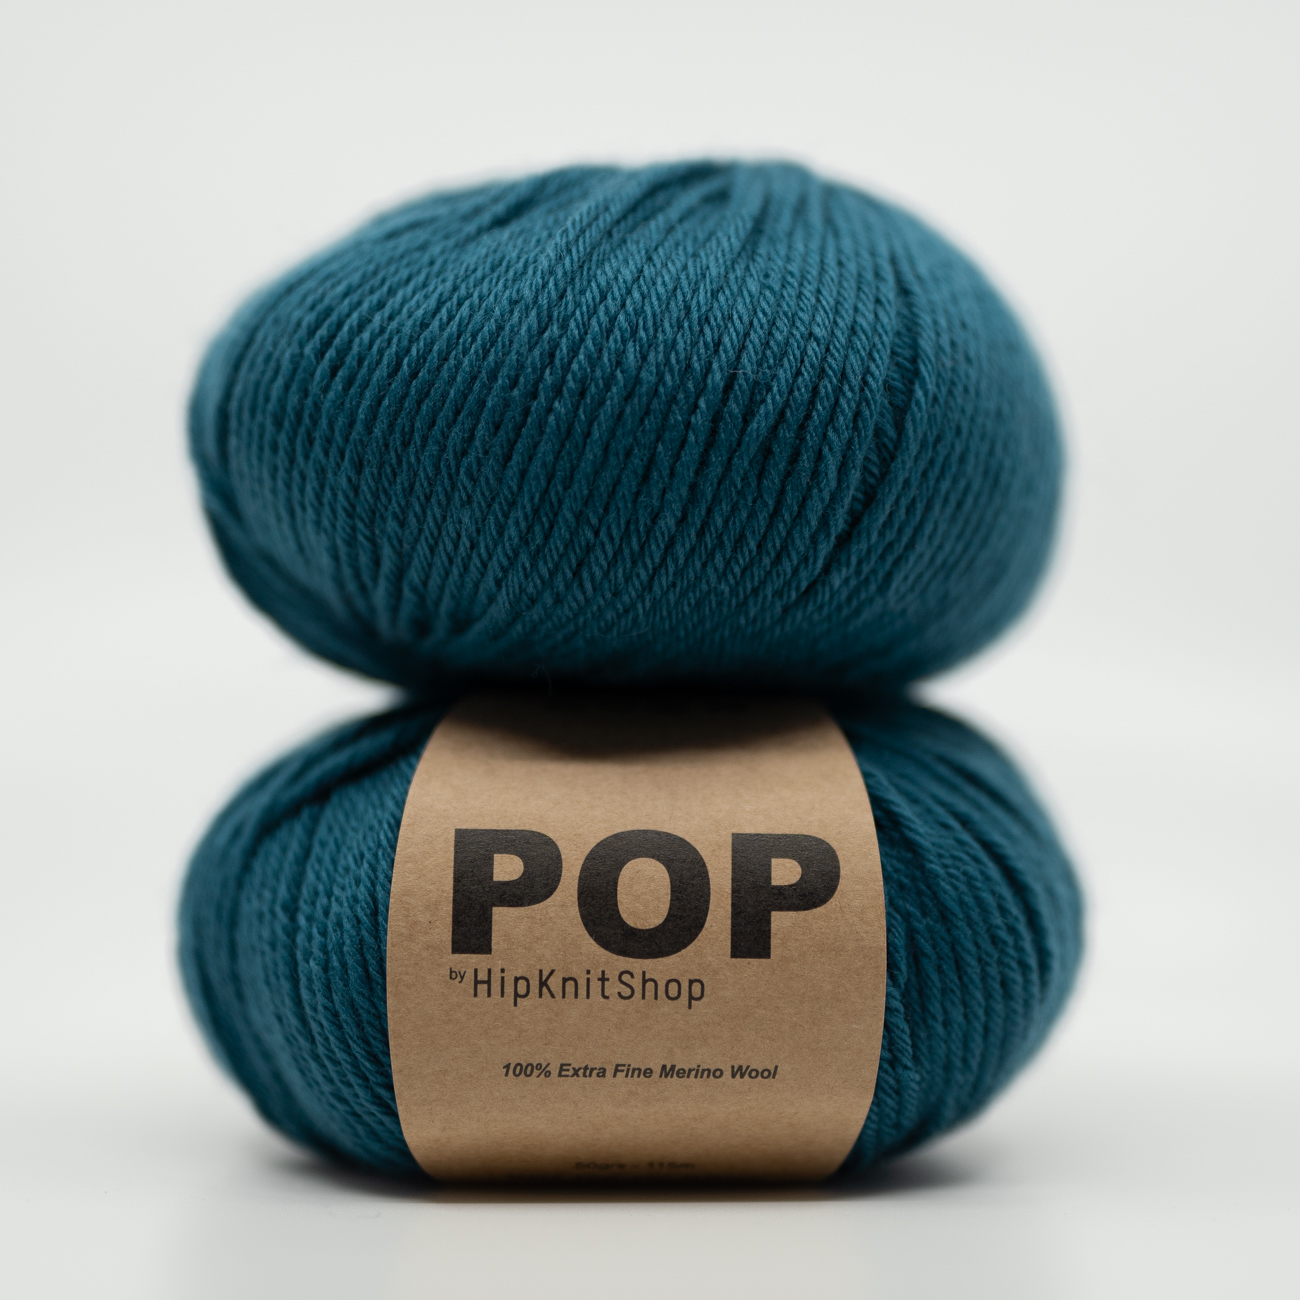  - Blueberry | Pop merino | Merino wool yarn - by HipKnitShop - 27/09/2020